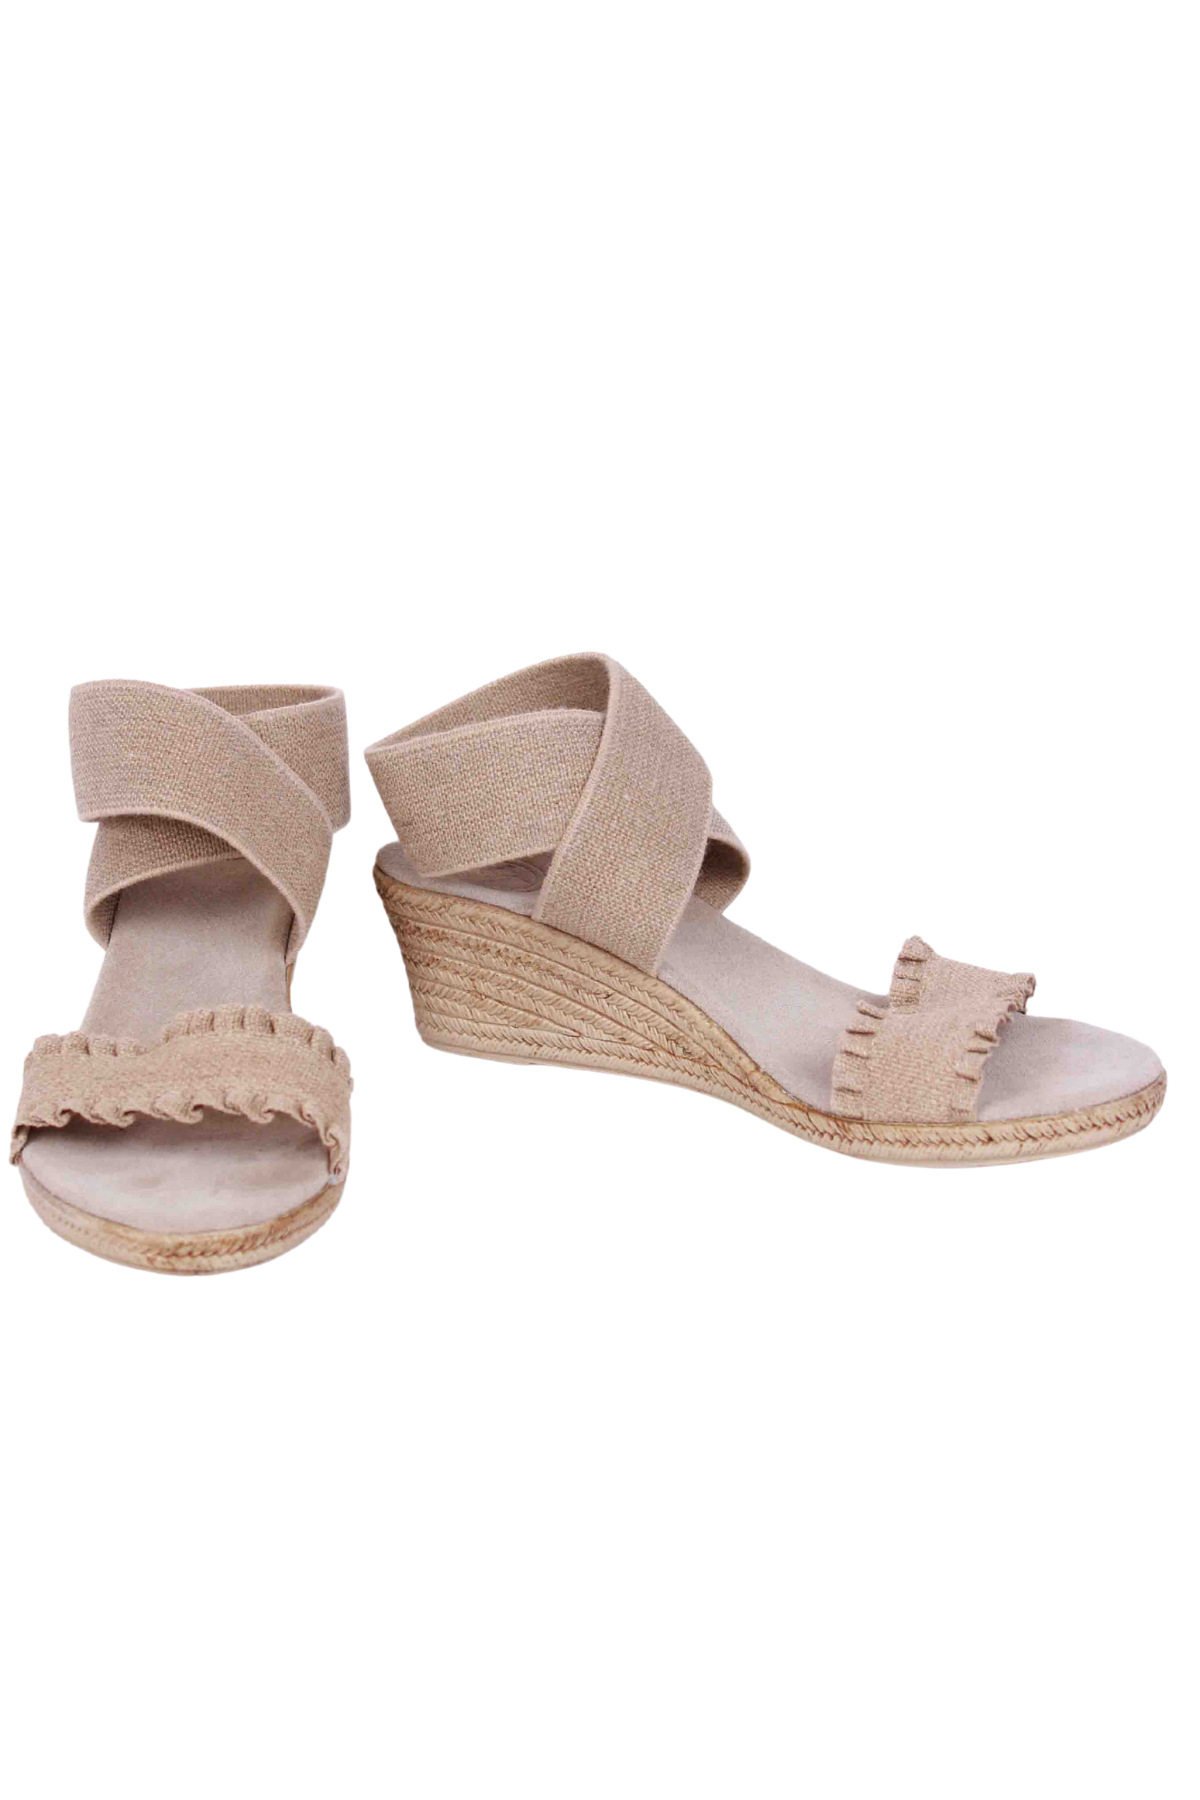 Side View of Linen Ruffle Carolina Sandal by Charleston Shoe Company